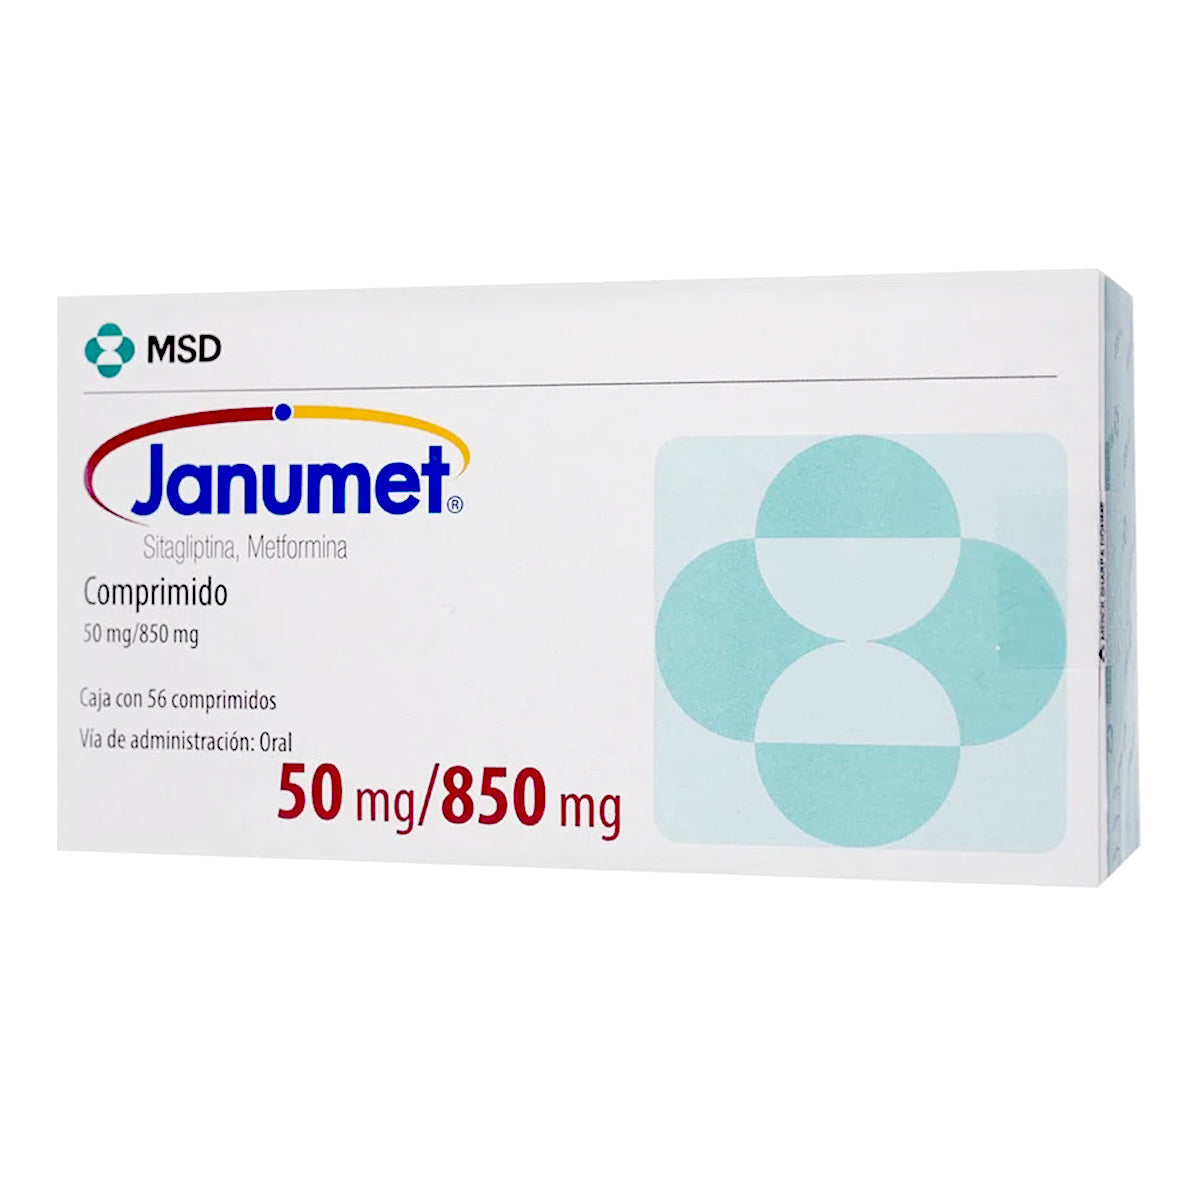 Janumet 50 mg/850 mg, 56 comprimidos.Sitagliptina/metformina